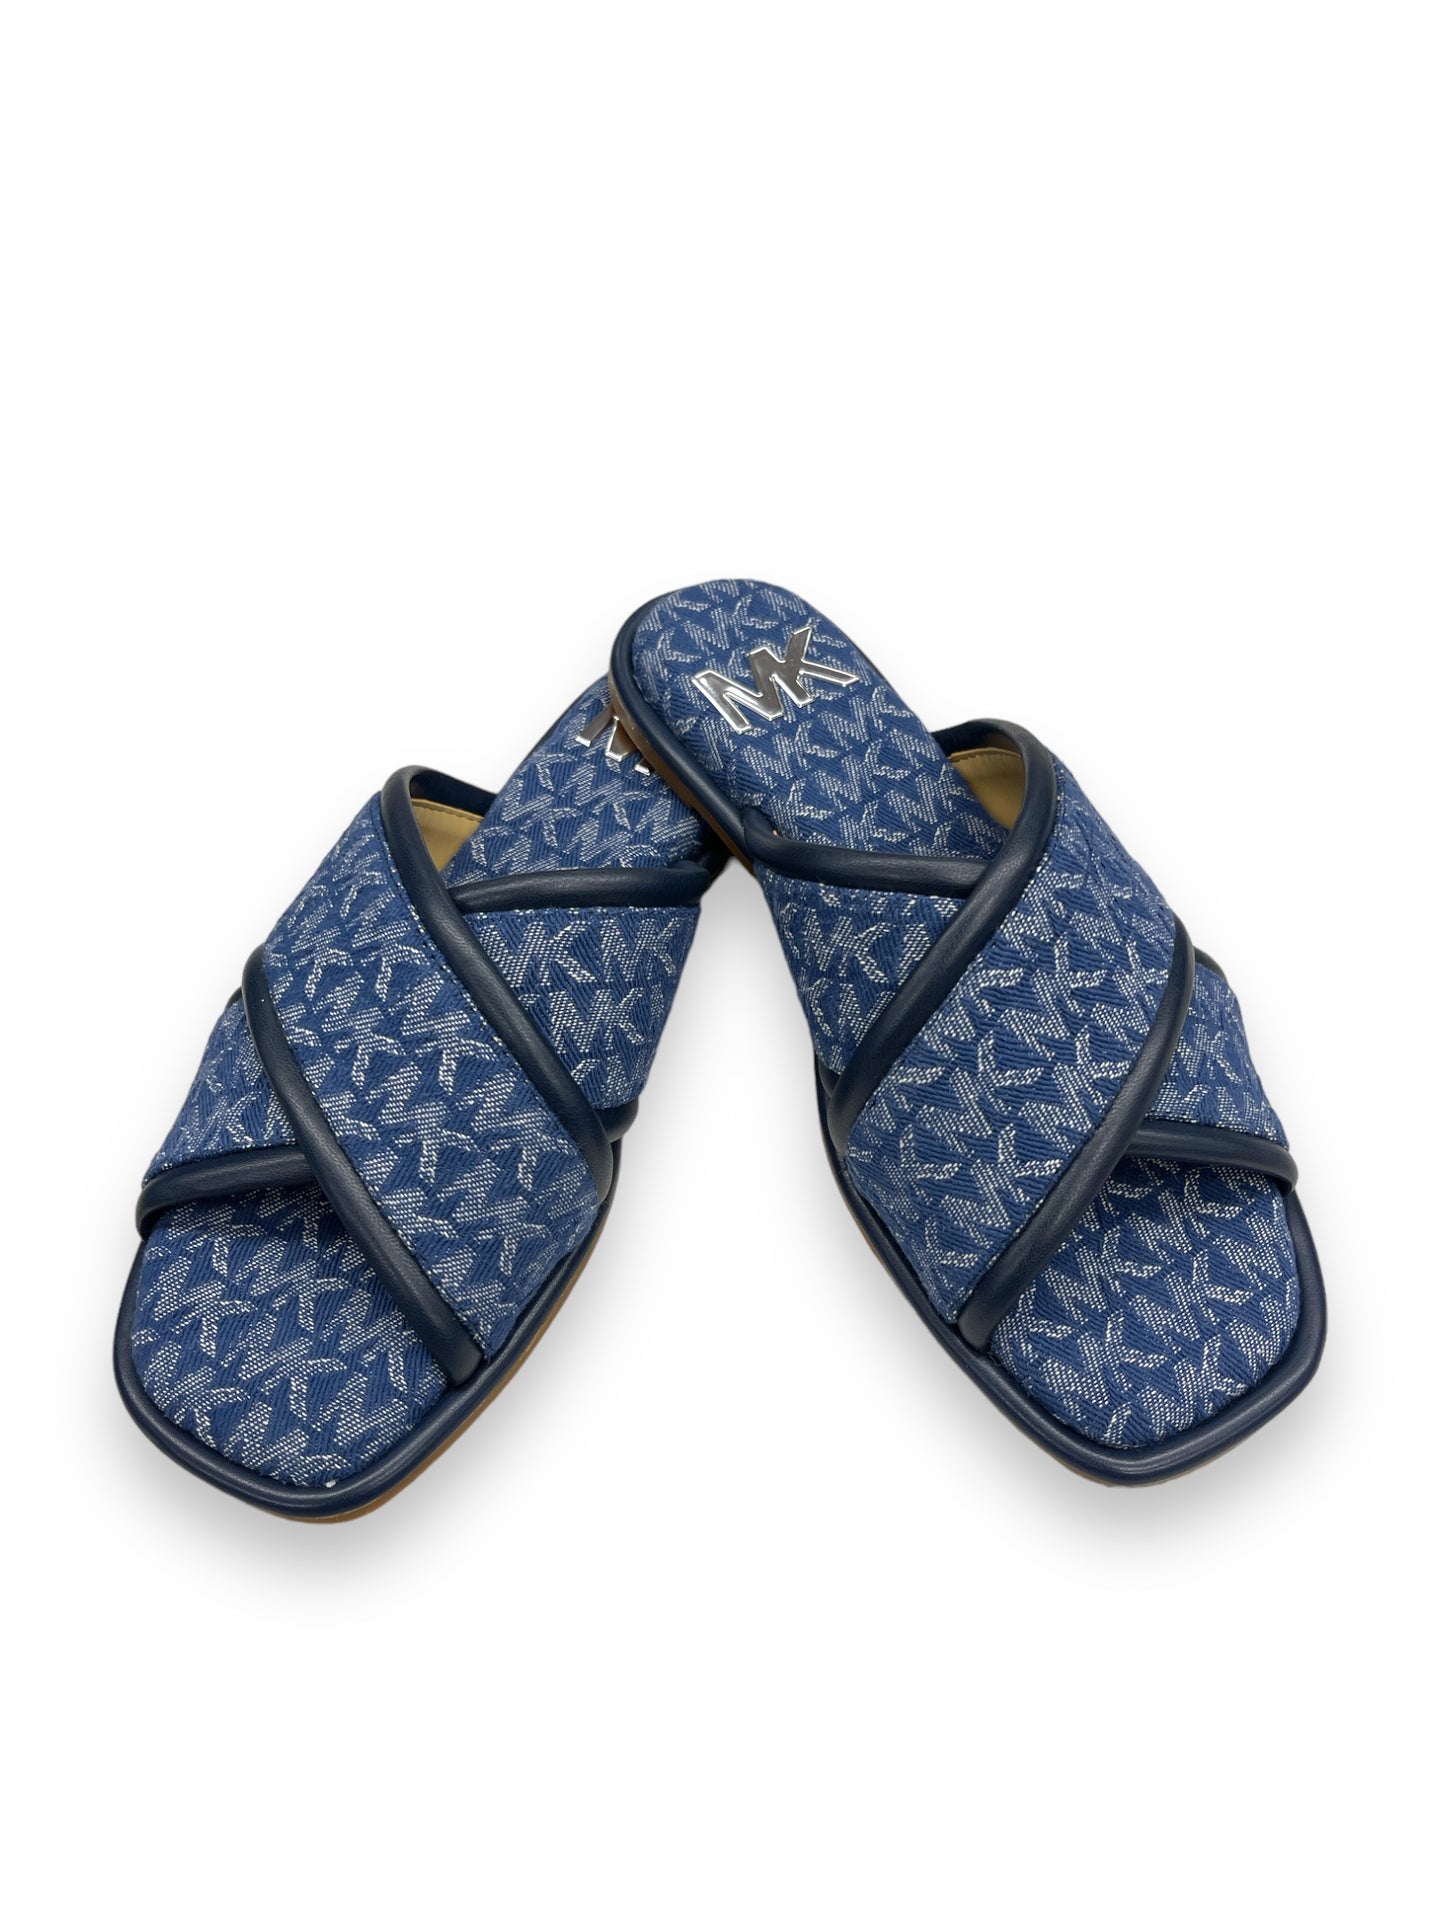 Sandals Designer By Michael Kors  Size: 6.5